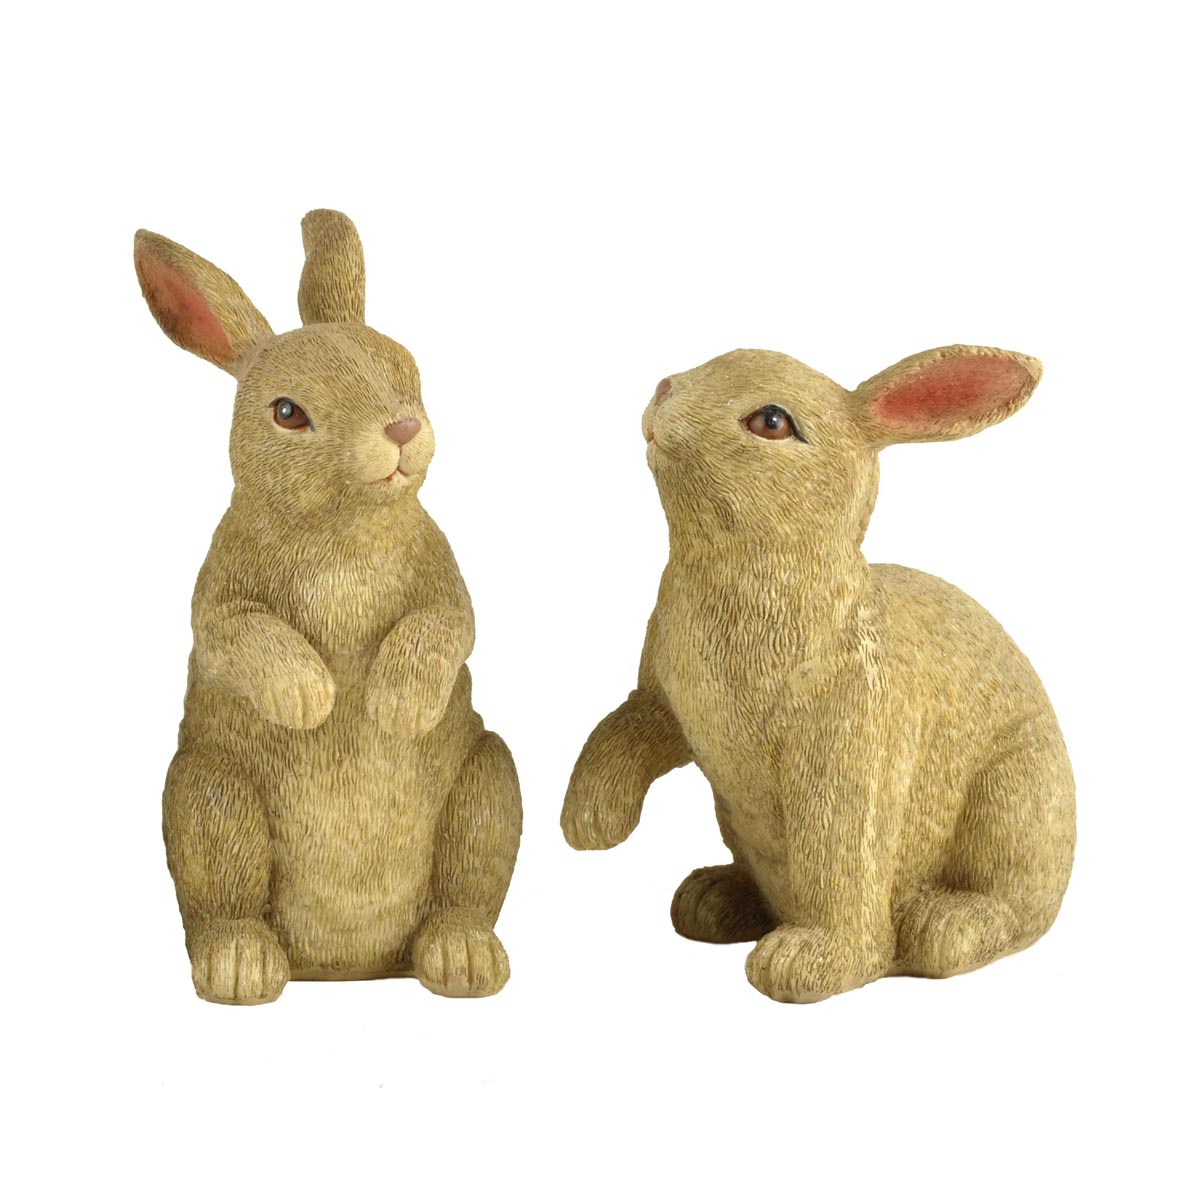 Ennas best quality easter bunny decorations handmade crafts home decor